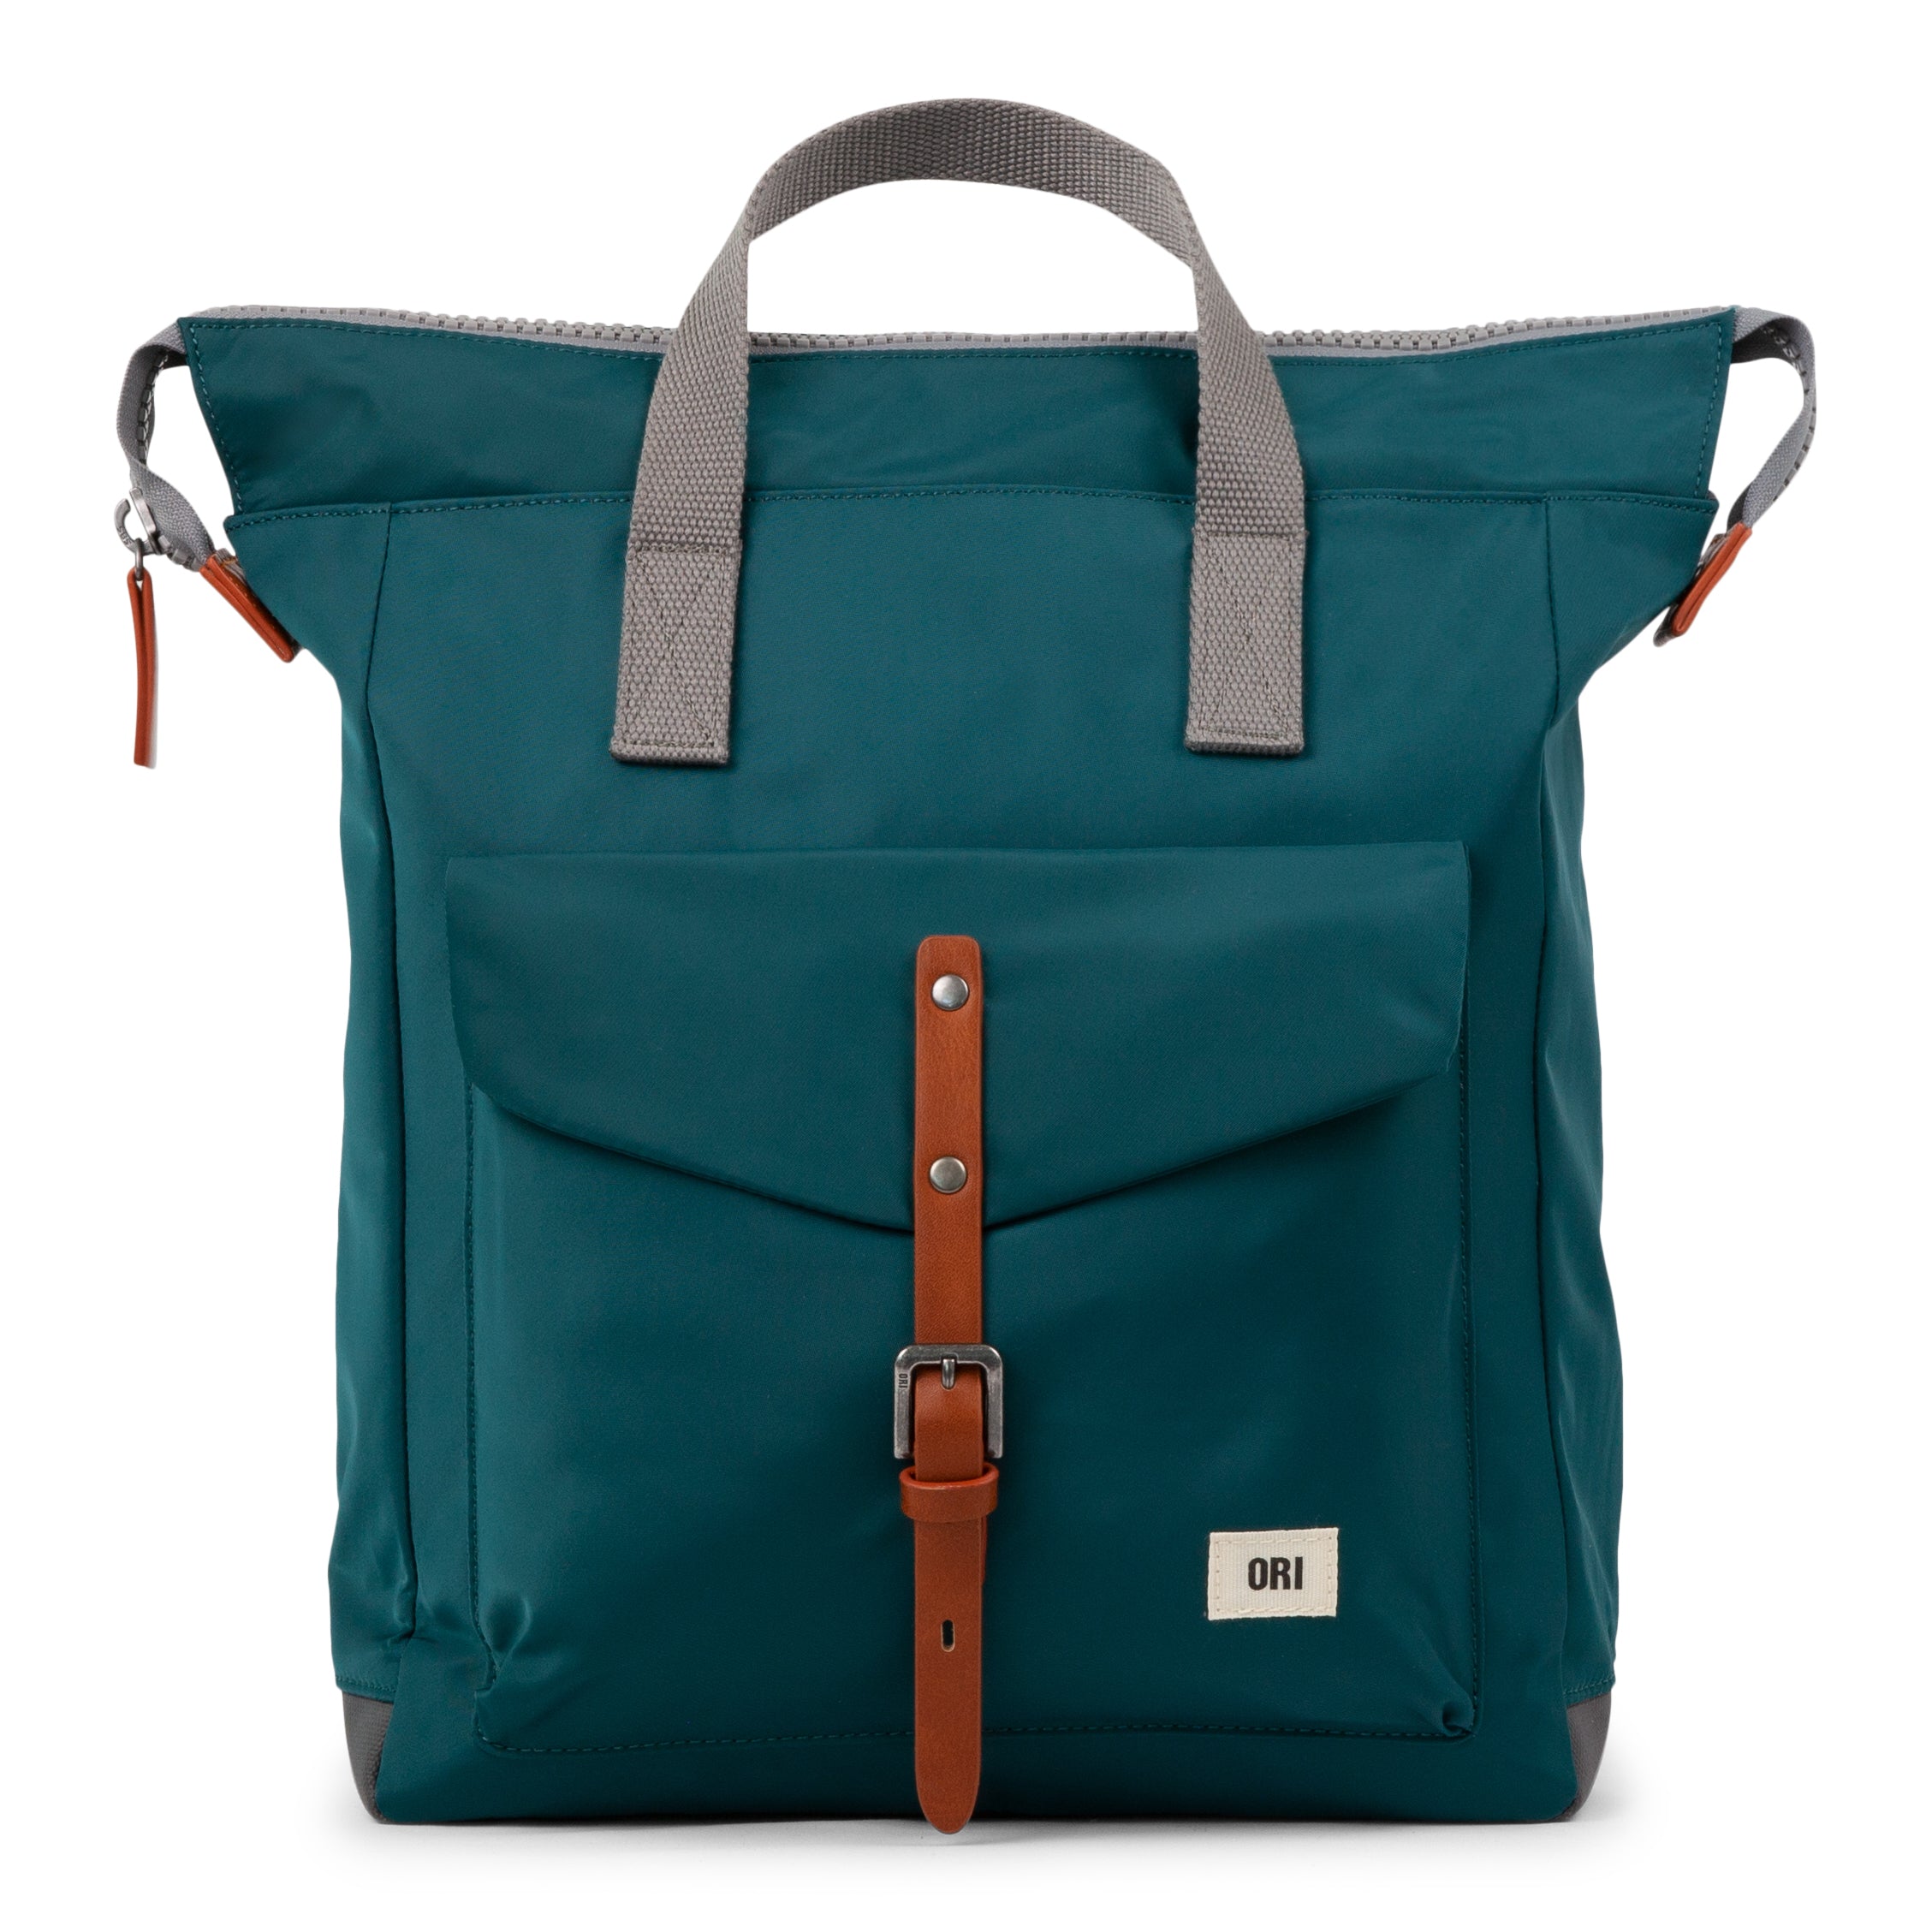 ORI Bags and Backpacks. Bantry C